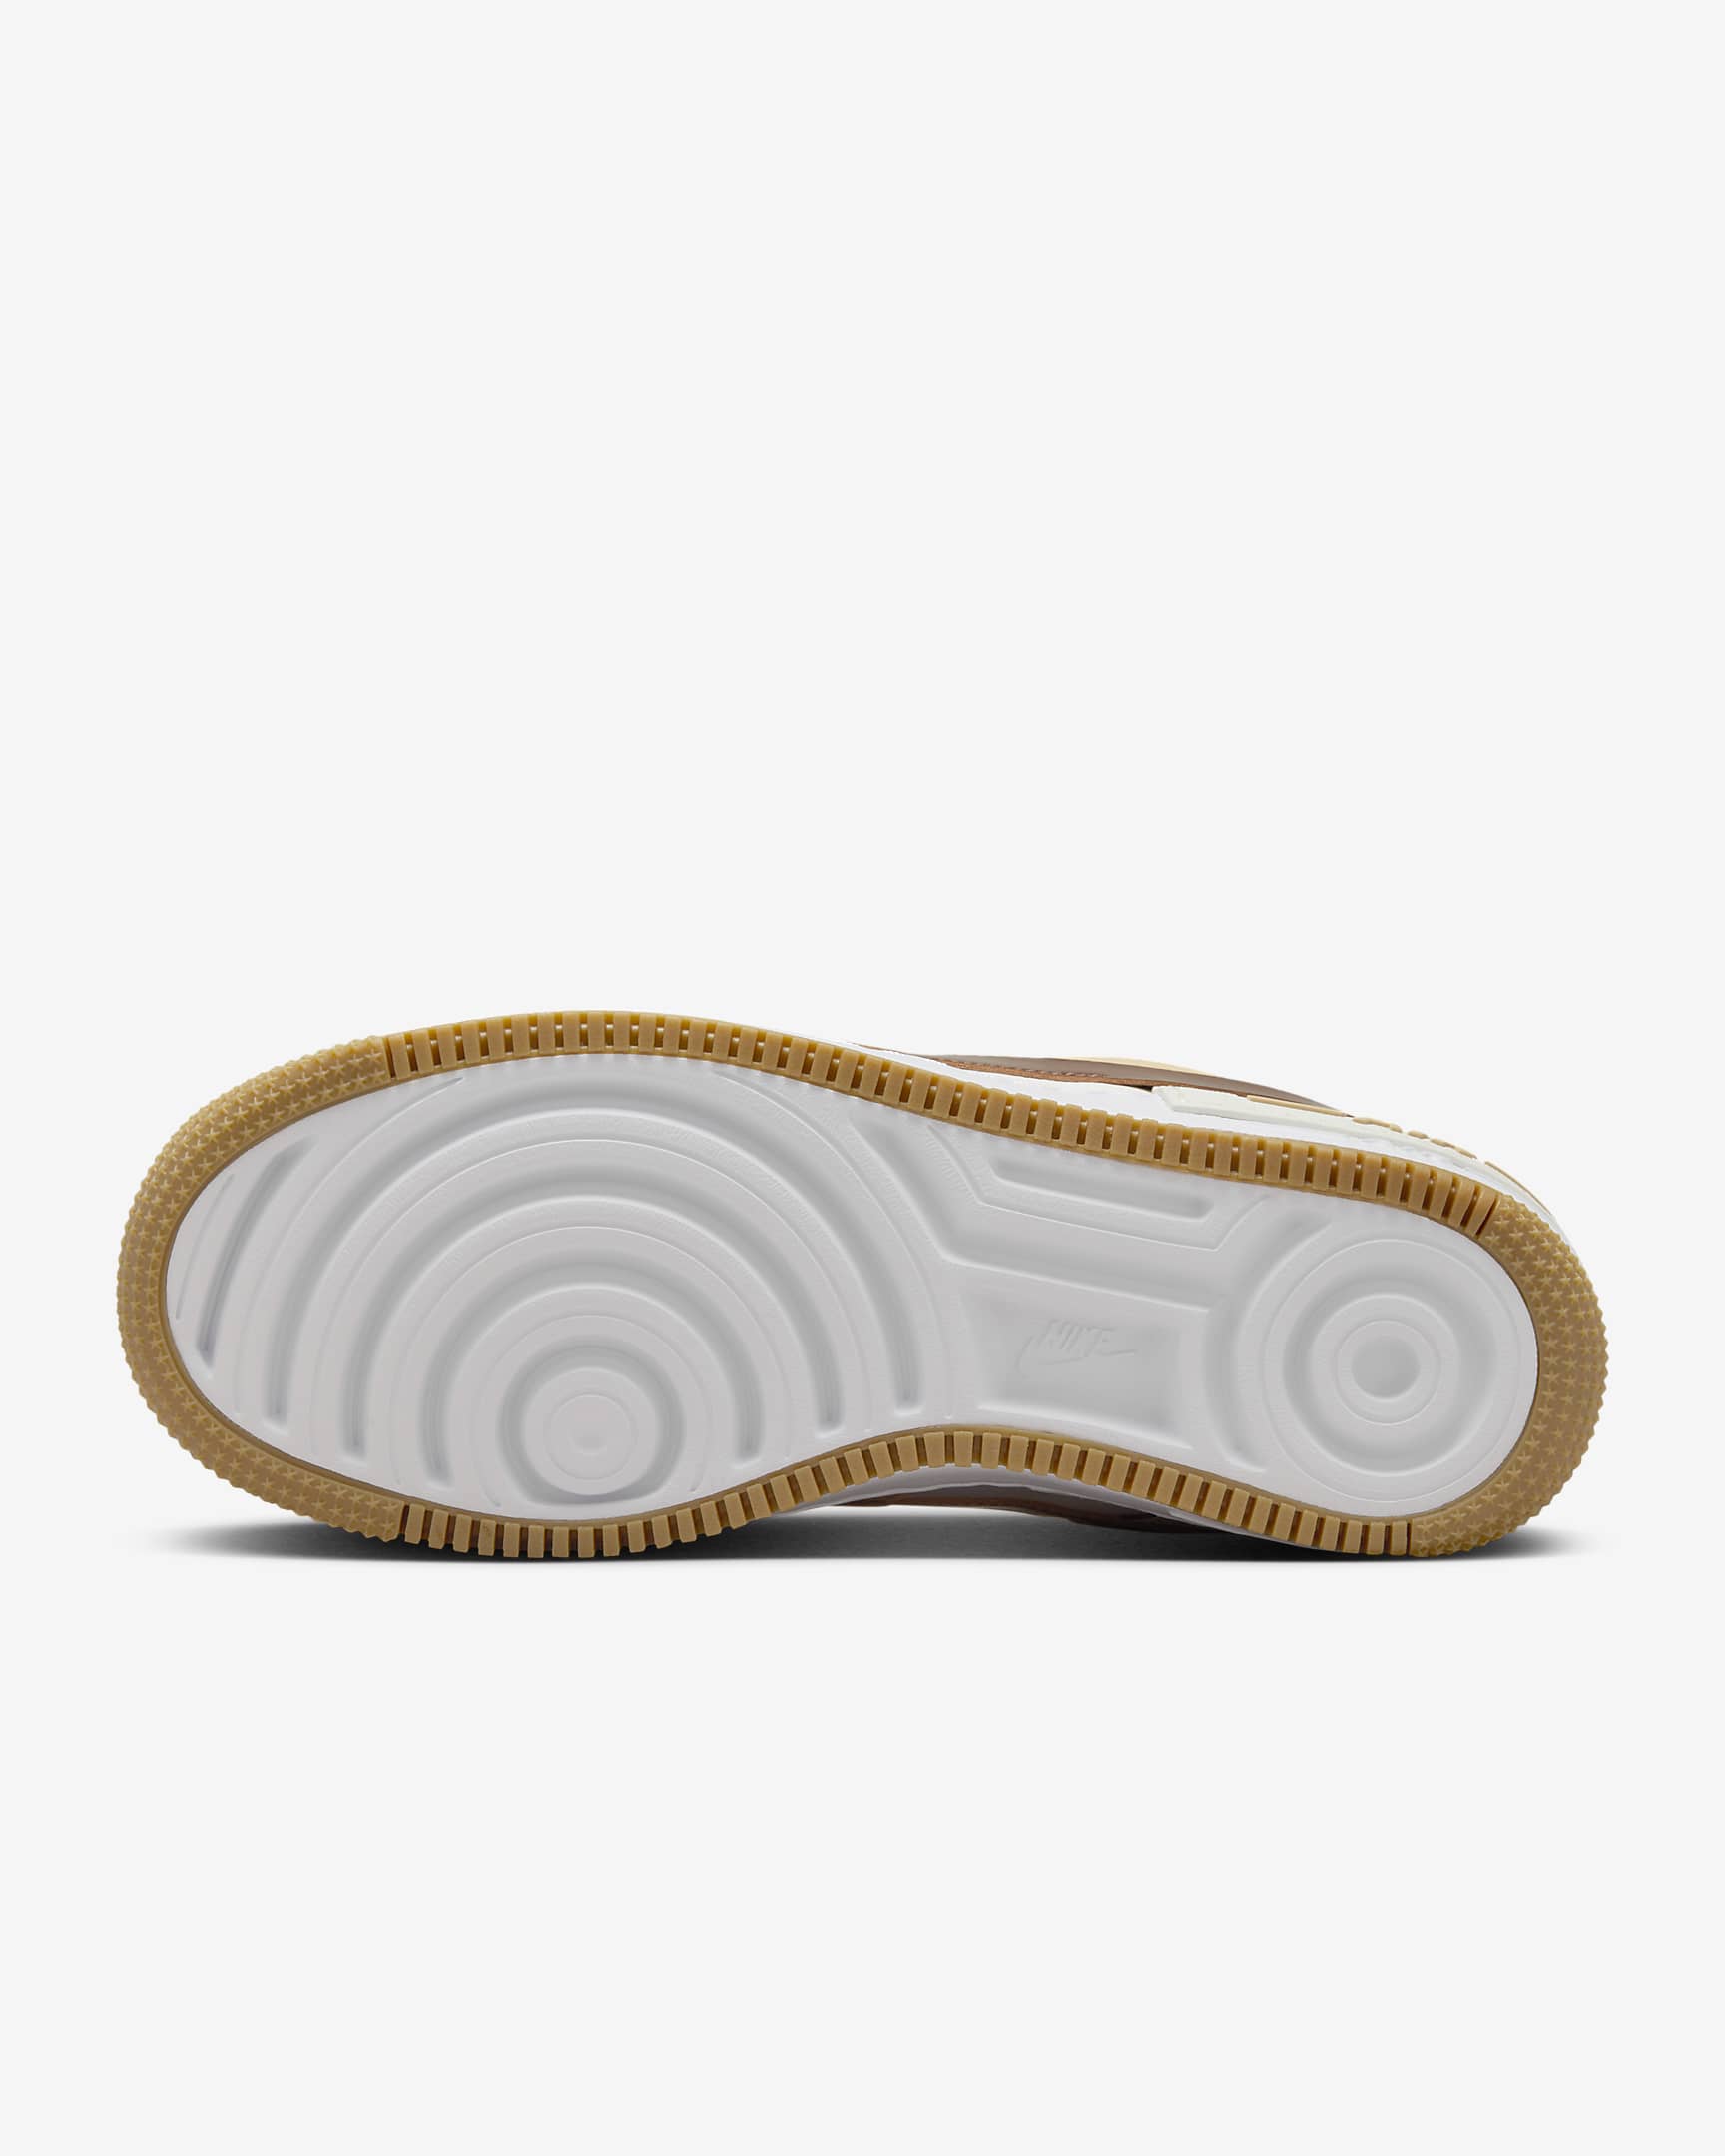 Nike Air Force 1 Shadow Women's Shoes - Sail/Flax/Sesame/Cacao Wow